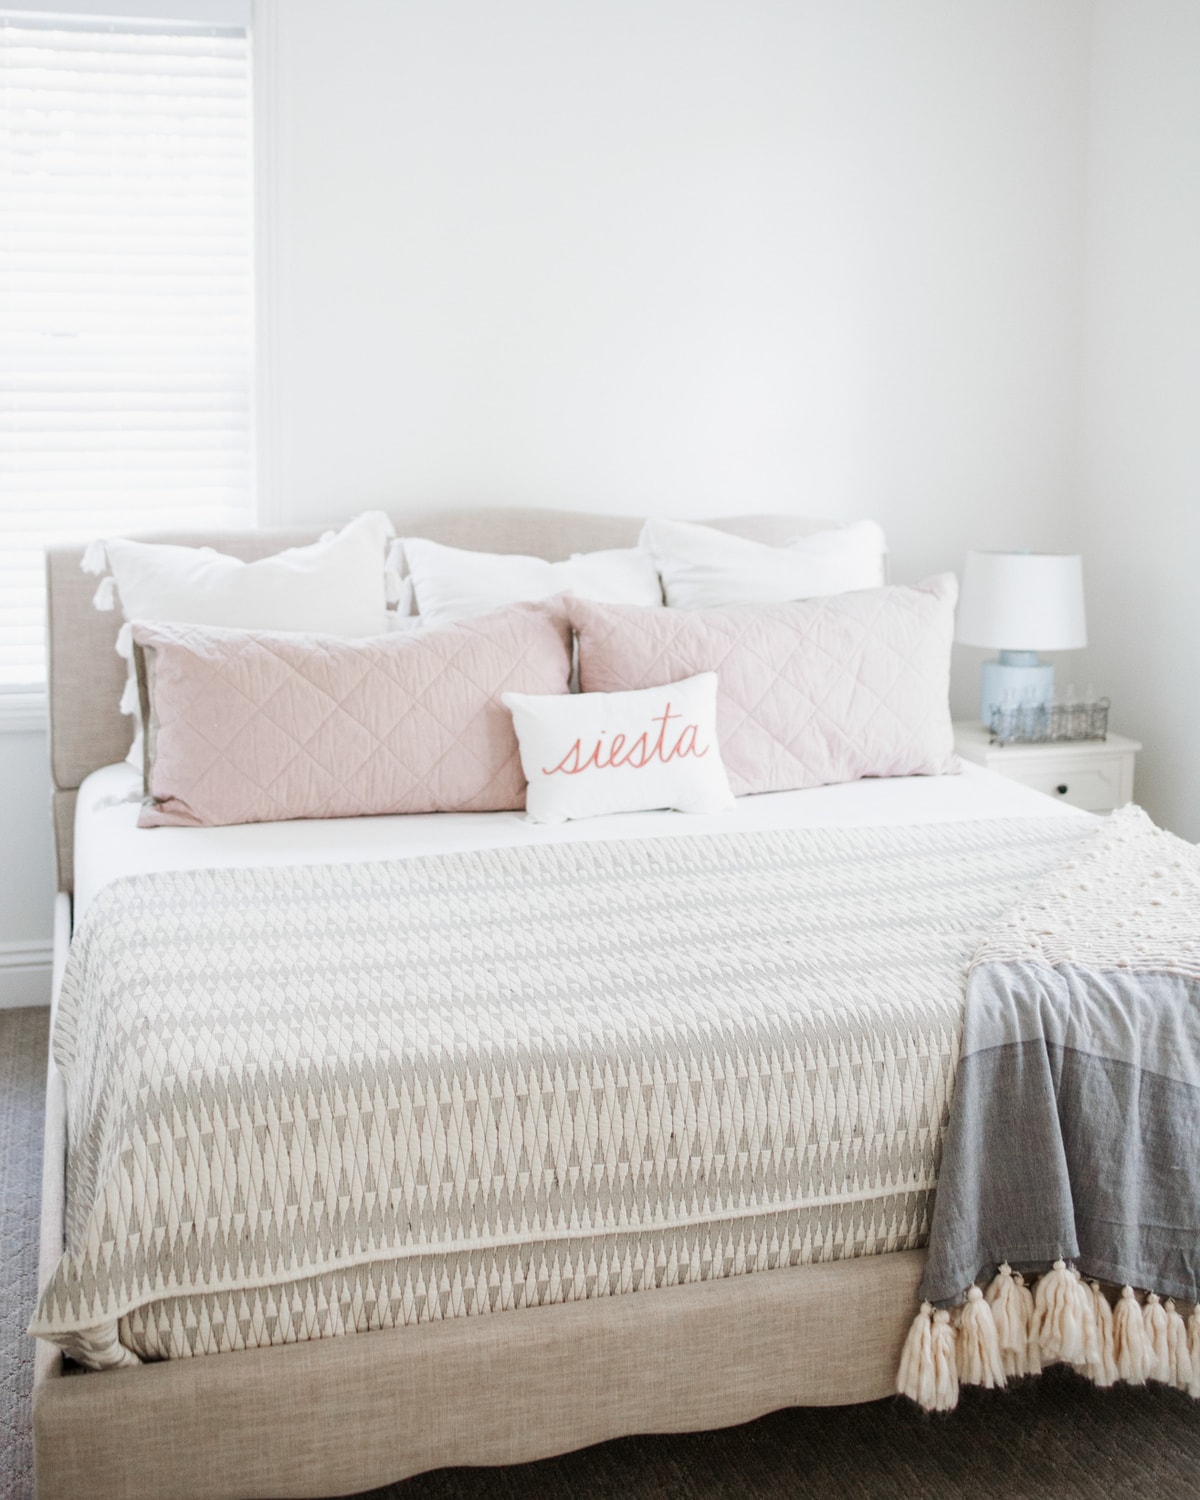 Cute guest room refresh ideas Decorative Pillow